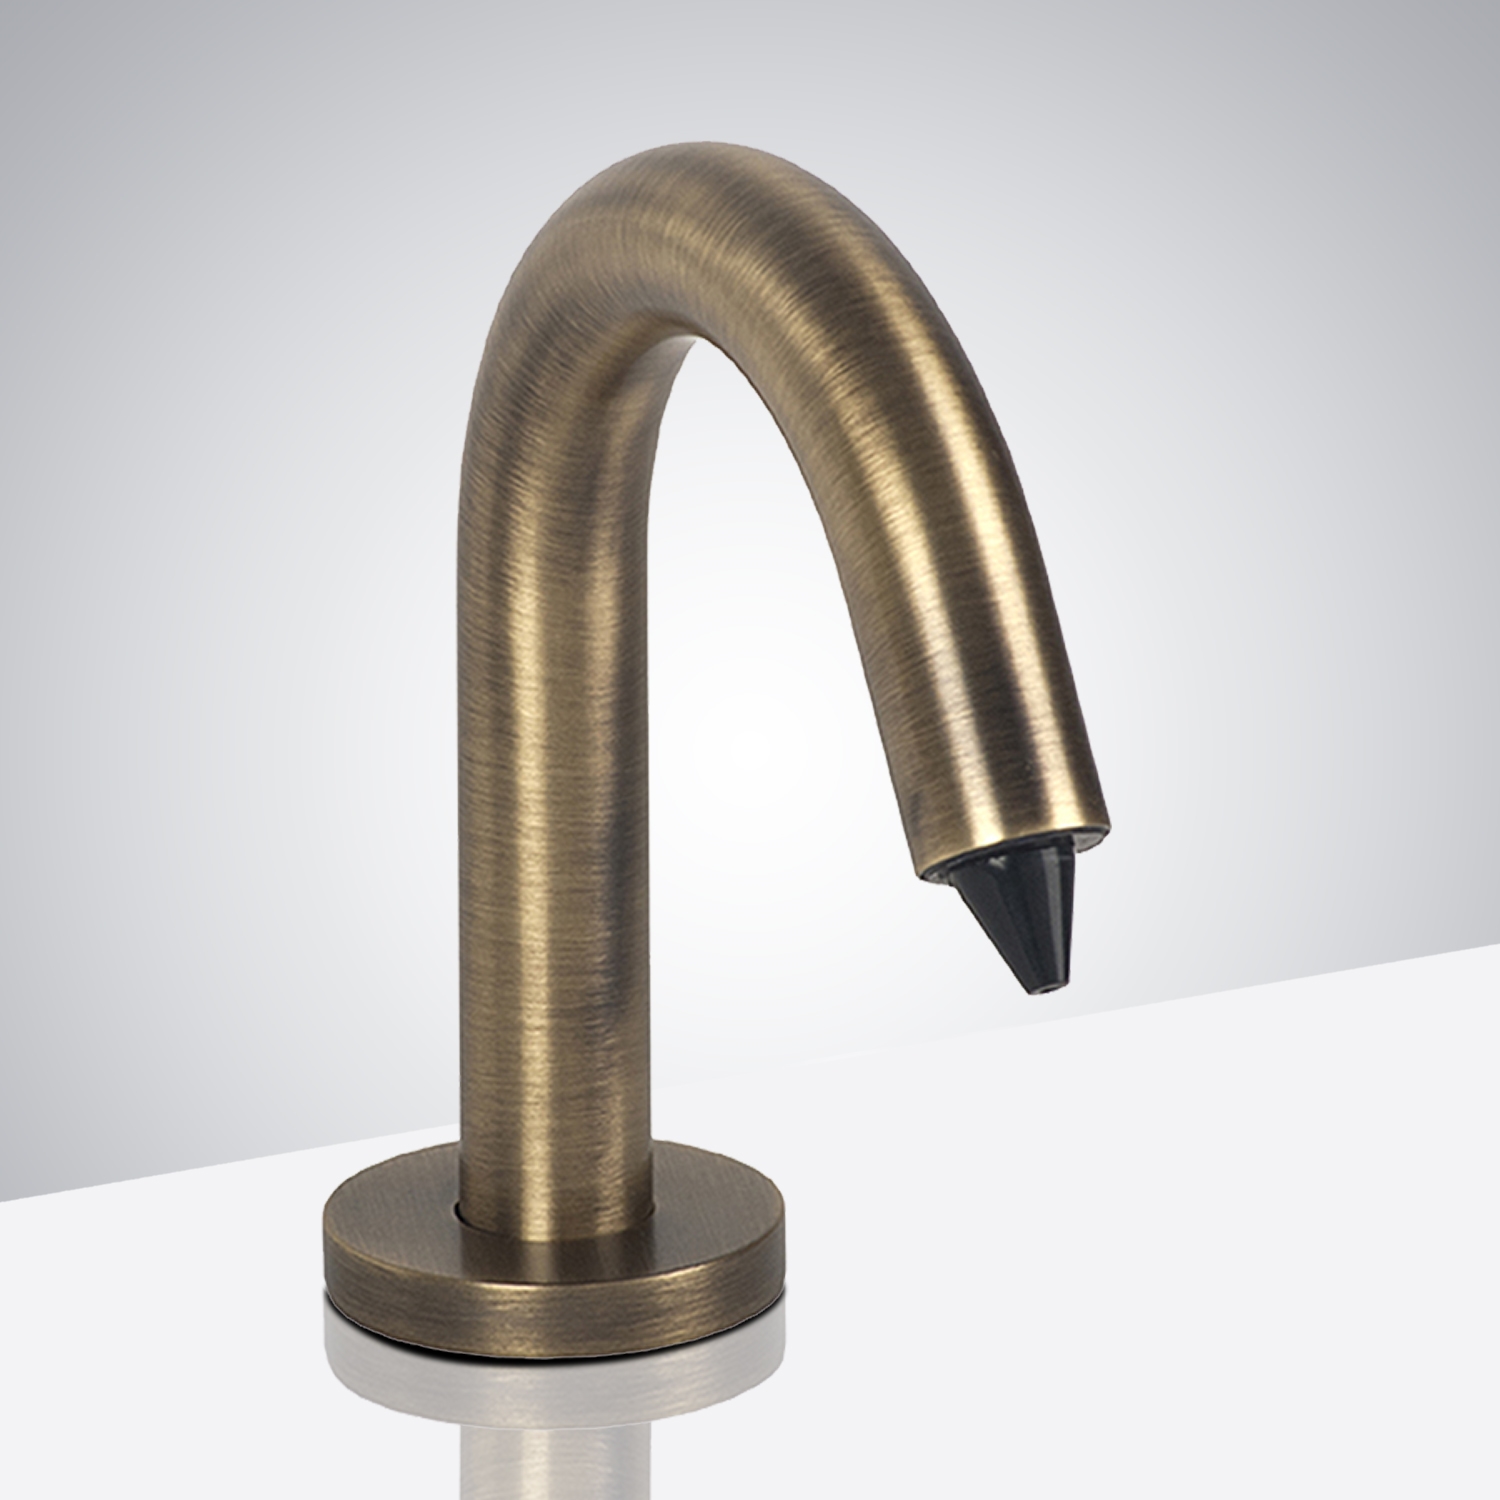 DUPLICATE Fontana Sensor Deck Mount  Soap Dispenser In Antique Brass Finish